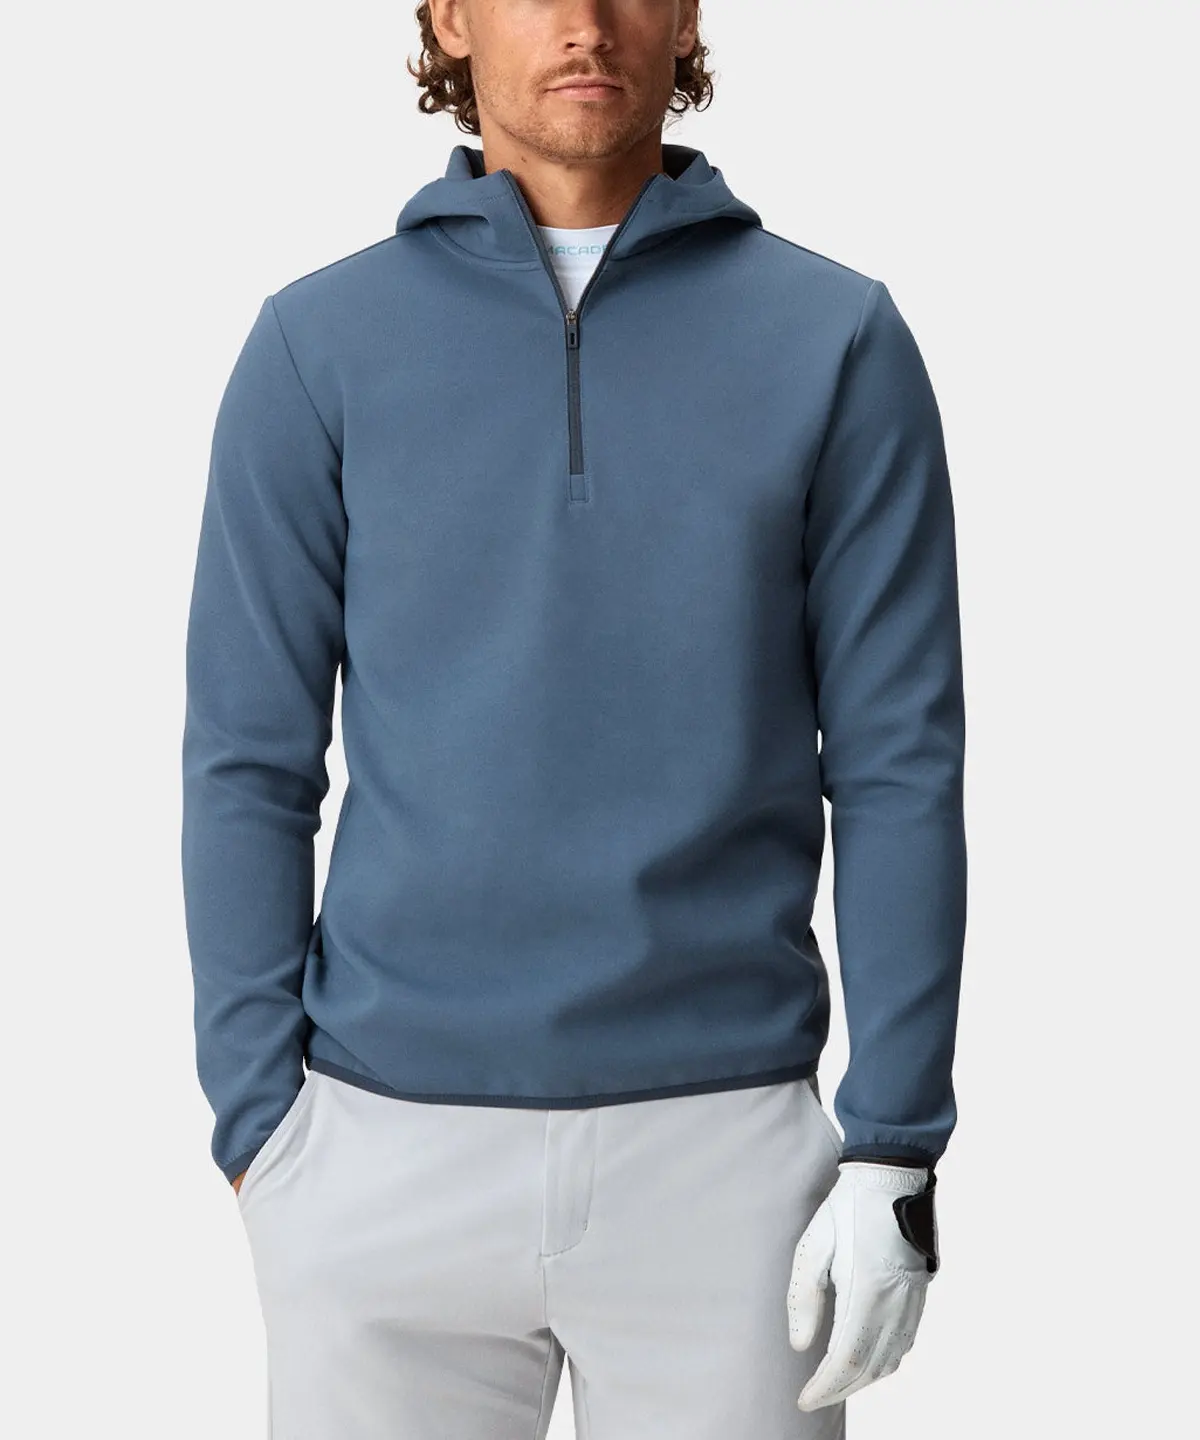 Performance Polyester Spandex soft jersey gym sport golf running hooded thermal quarter zip pullover mens 1/4 zip fleece hoodie